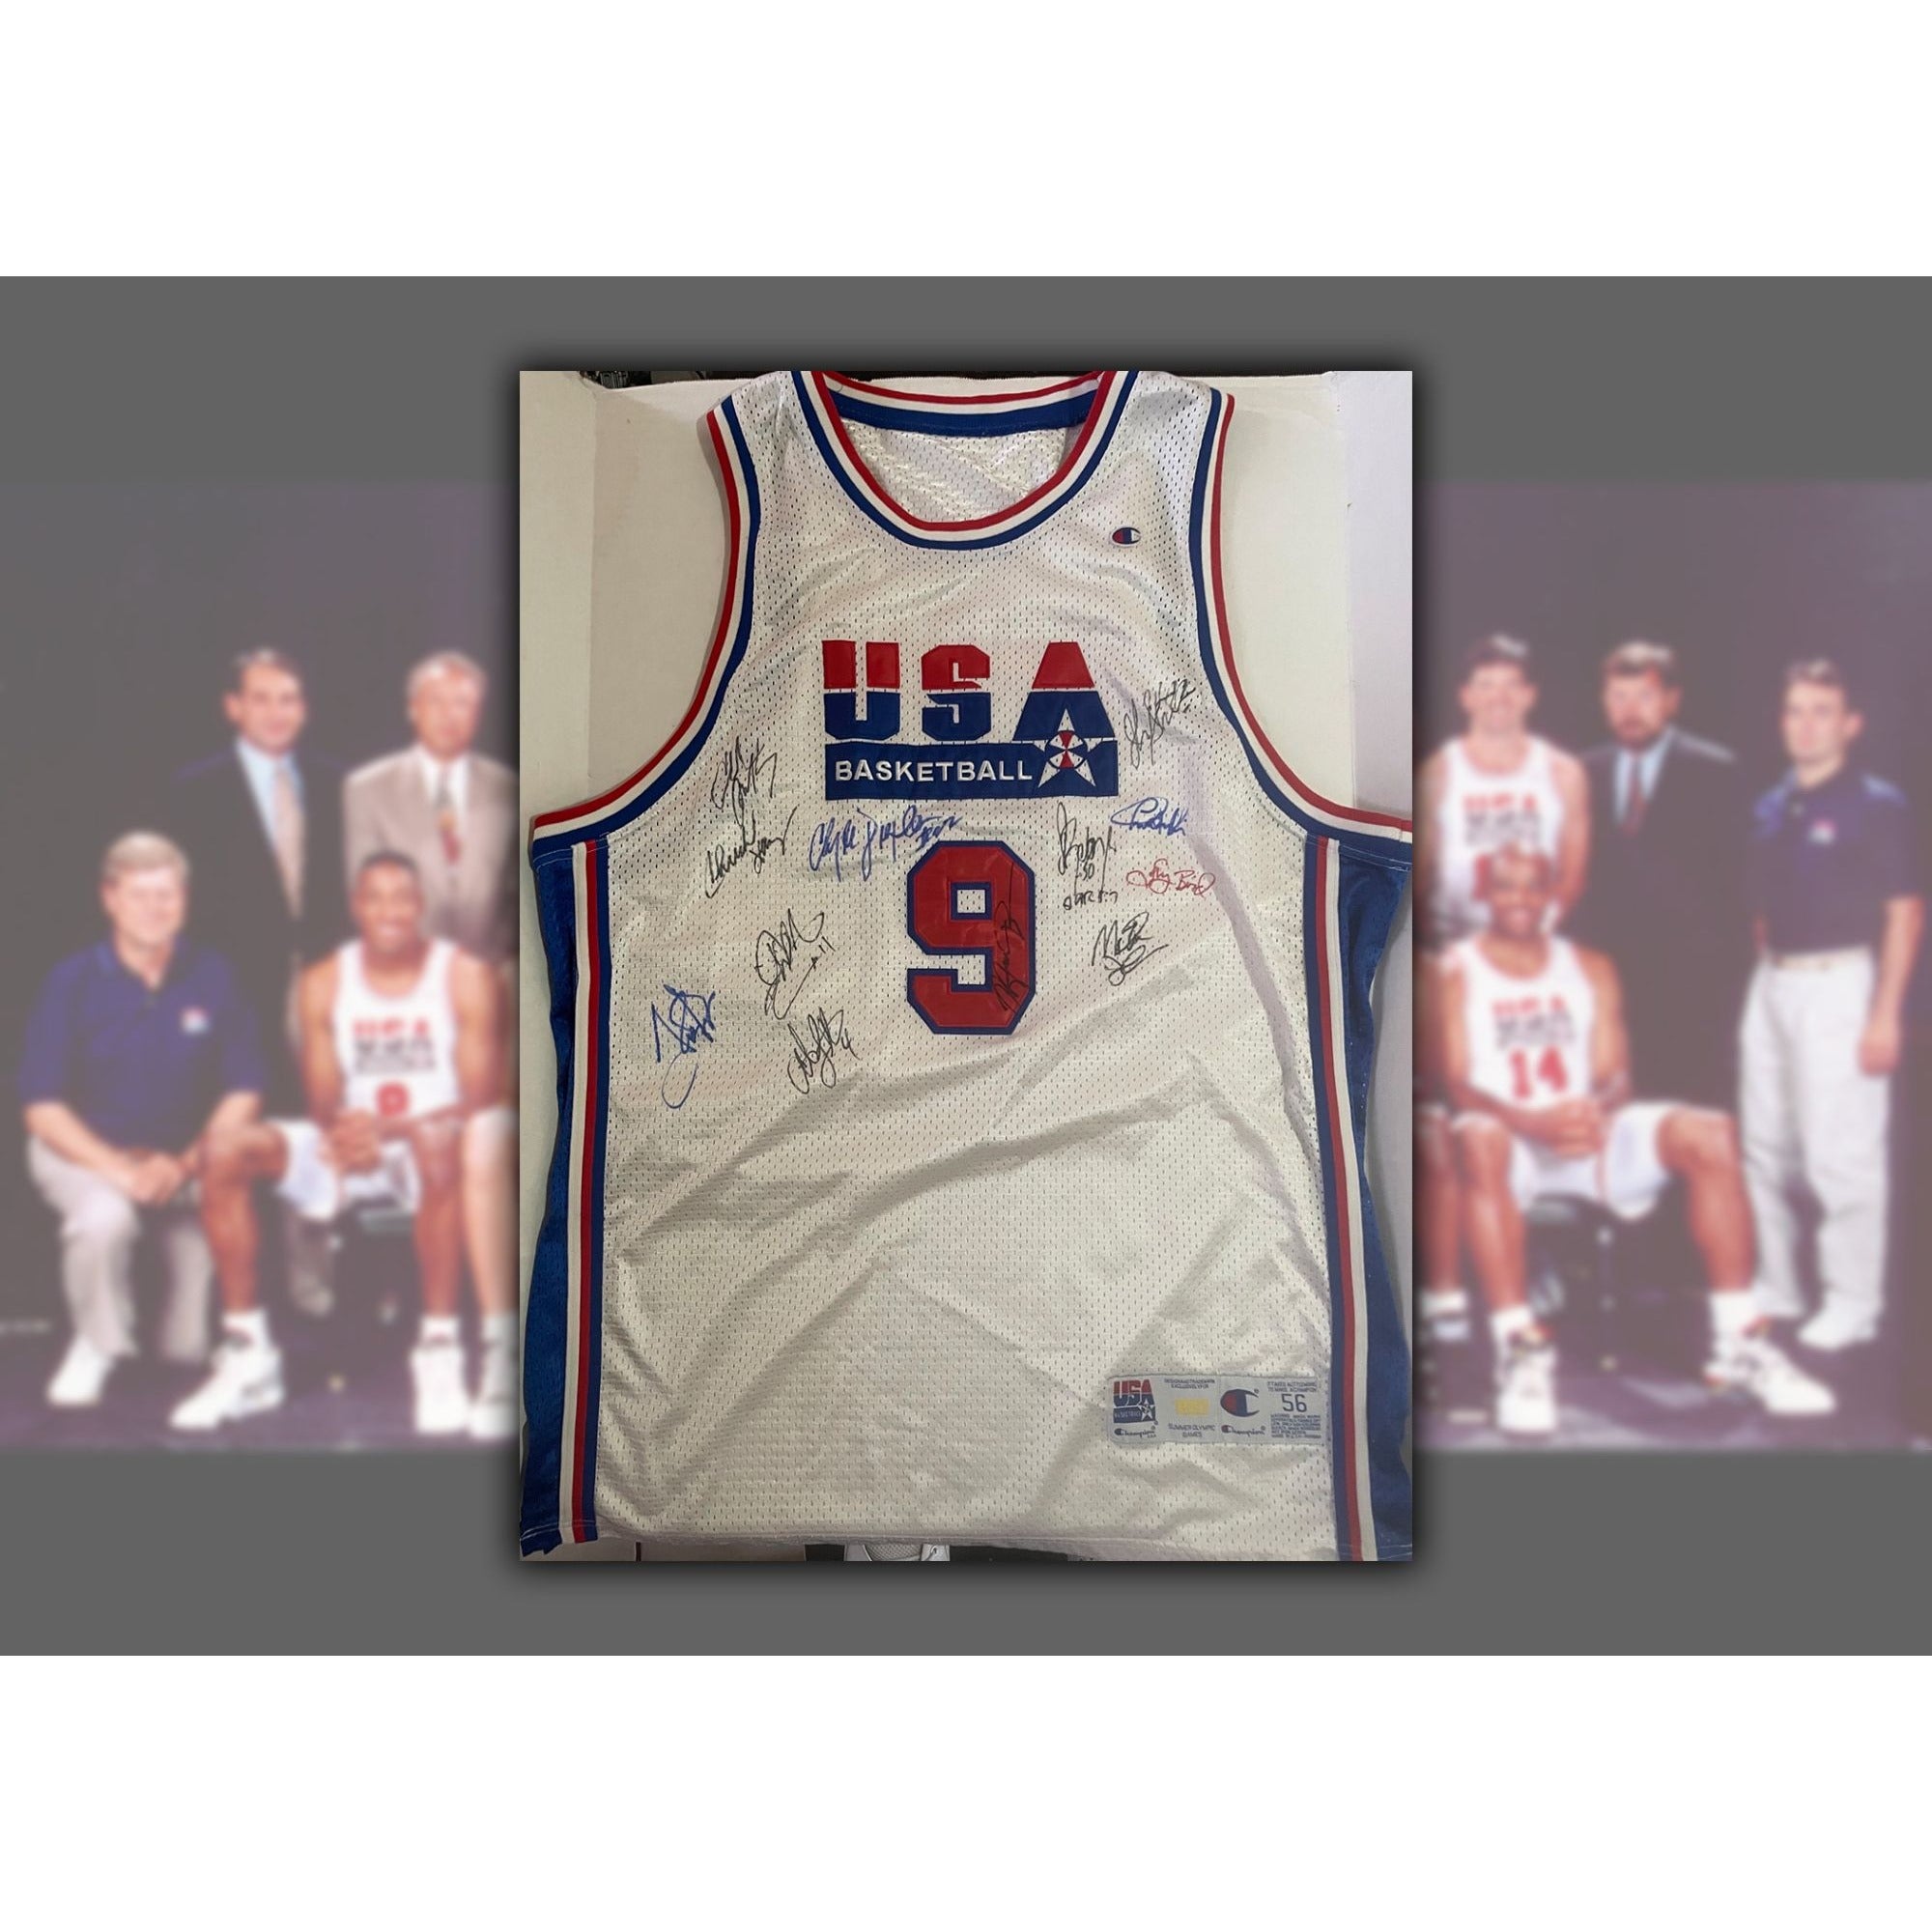 Michael Jordan Signed & Inscribed Nike 1992 Olympic Basketball